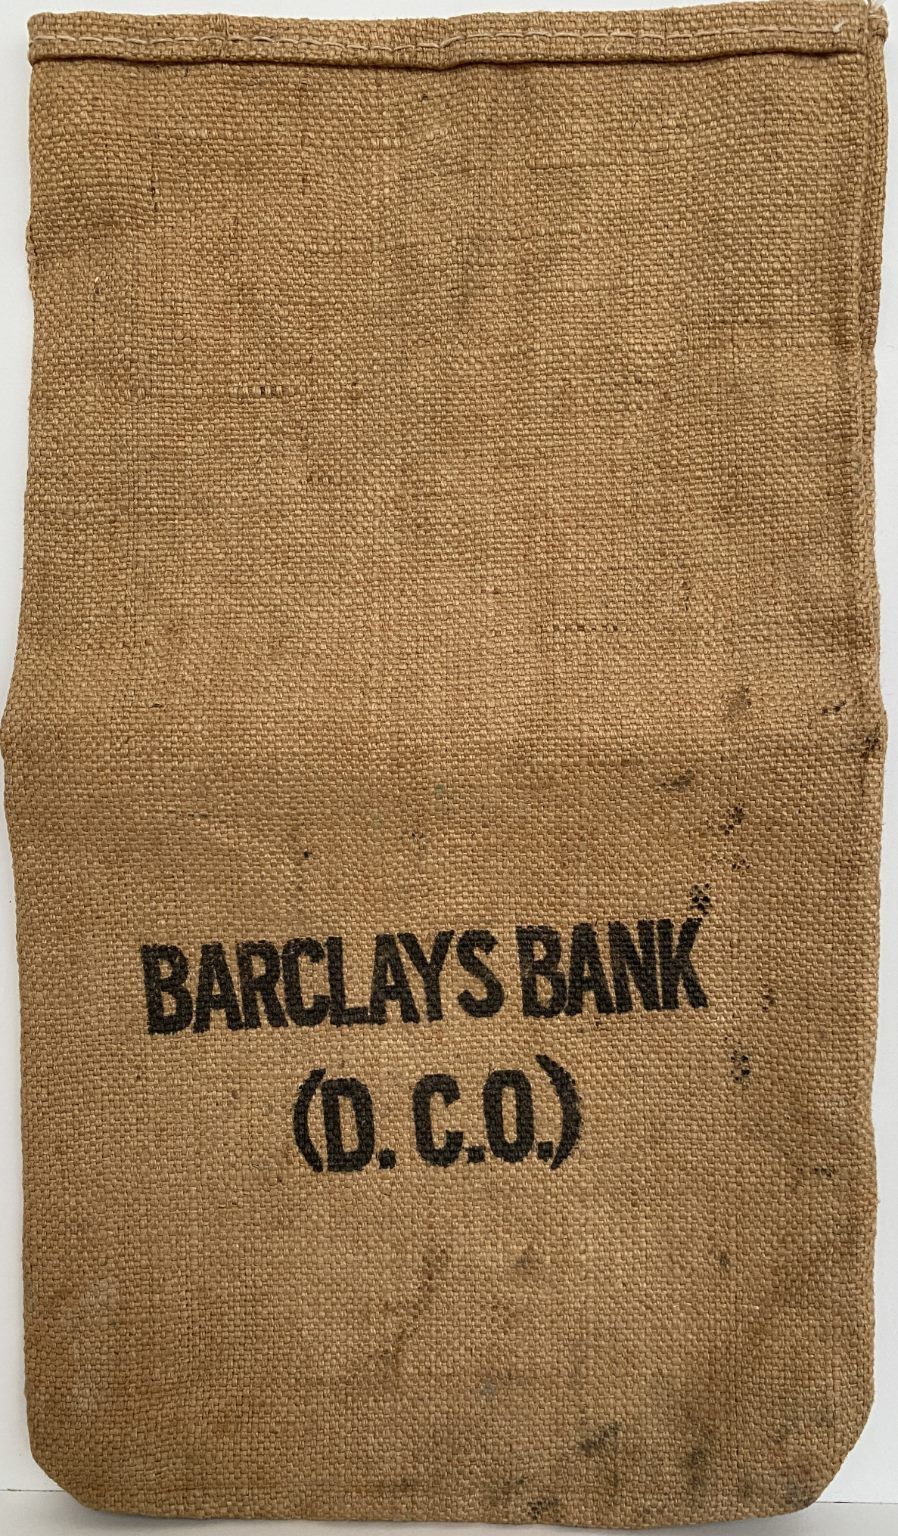 OLD BANKING MEMORABILIA: Hessian cash bag - Barclays Bank (D.C.O)